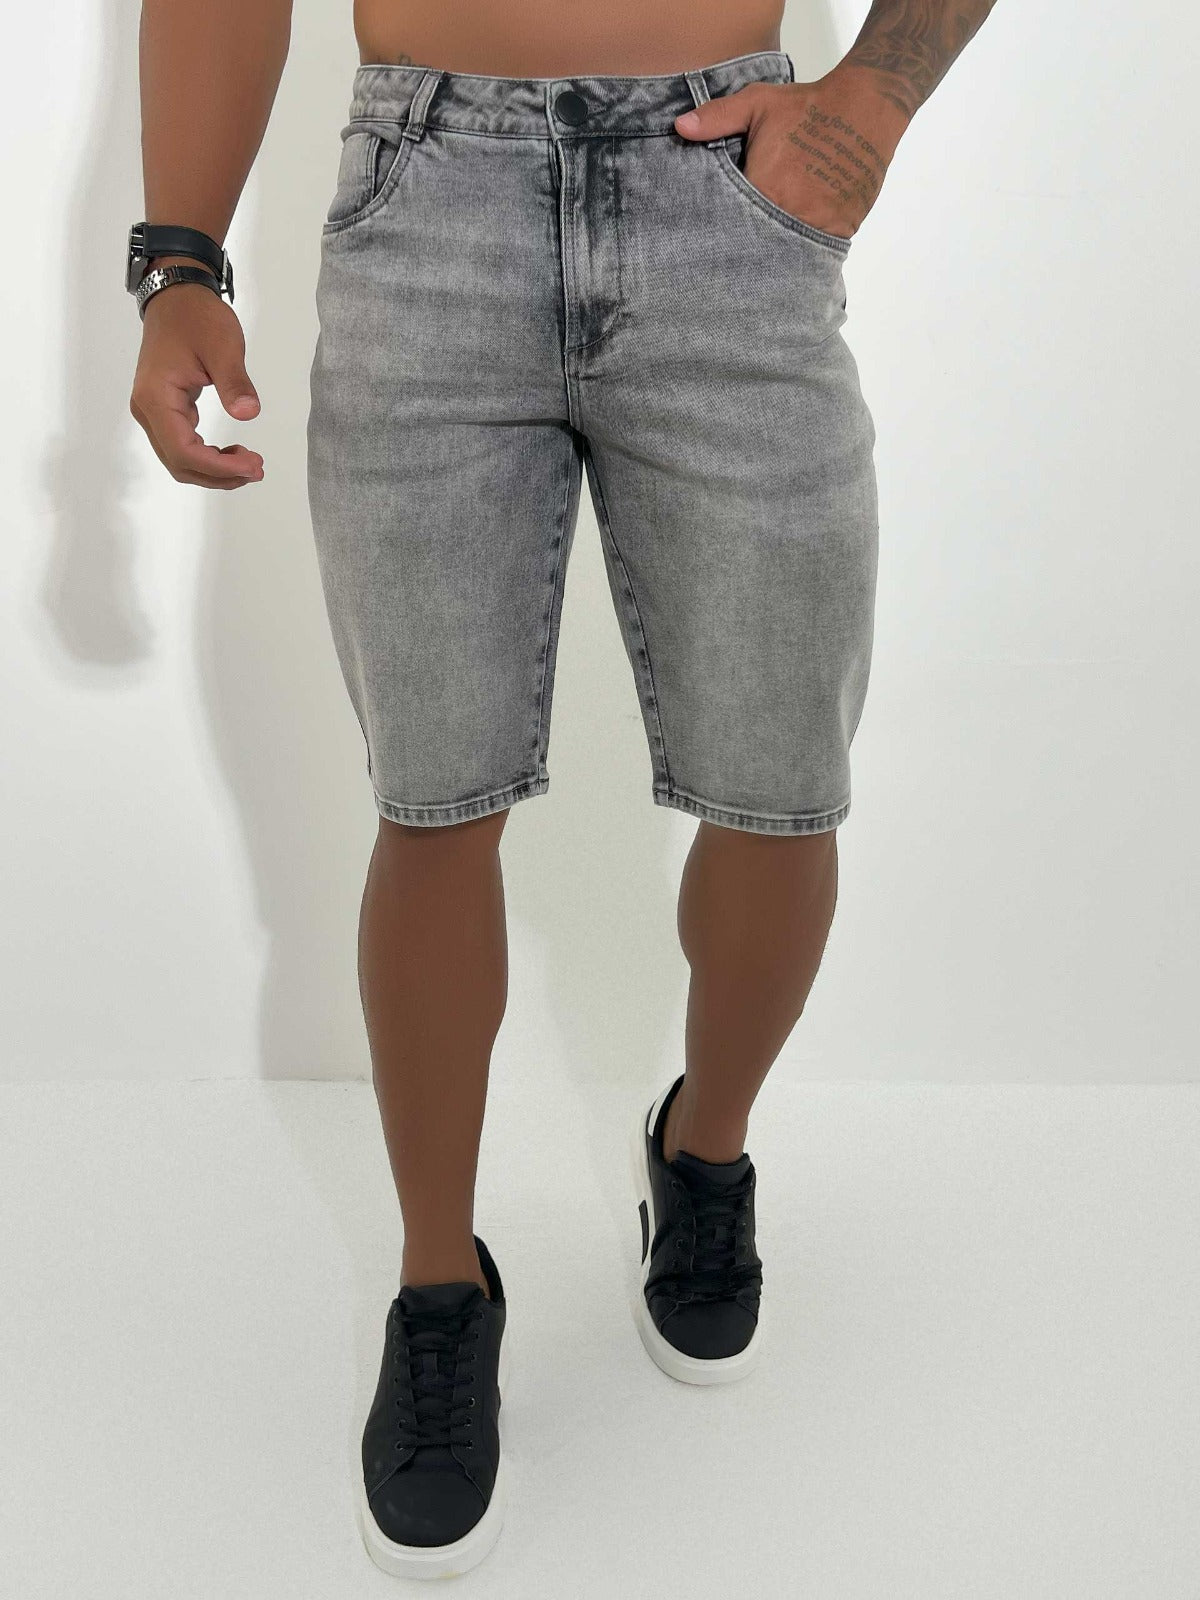 Shorts Jeans Masculino Pit Bull 80714